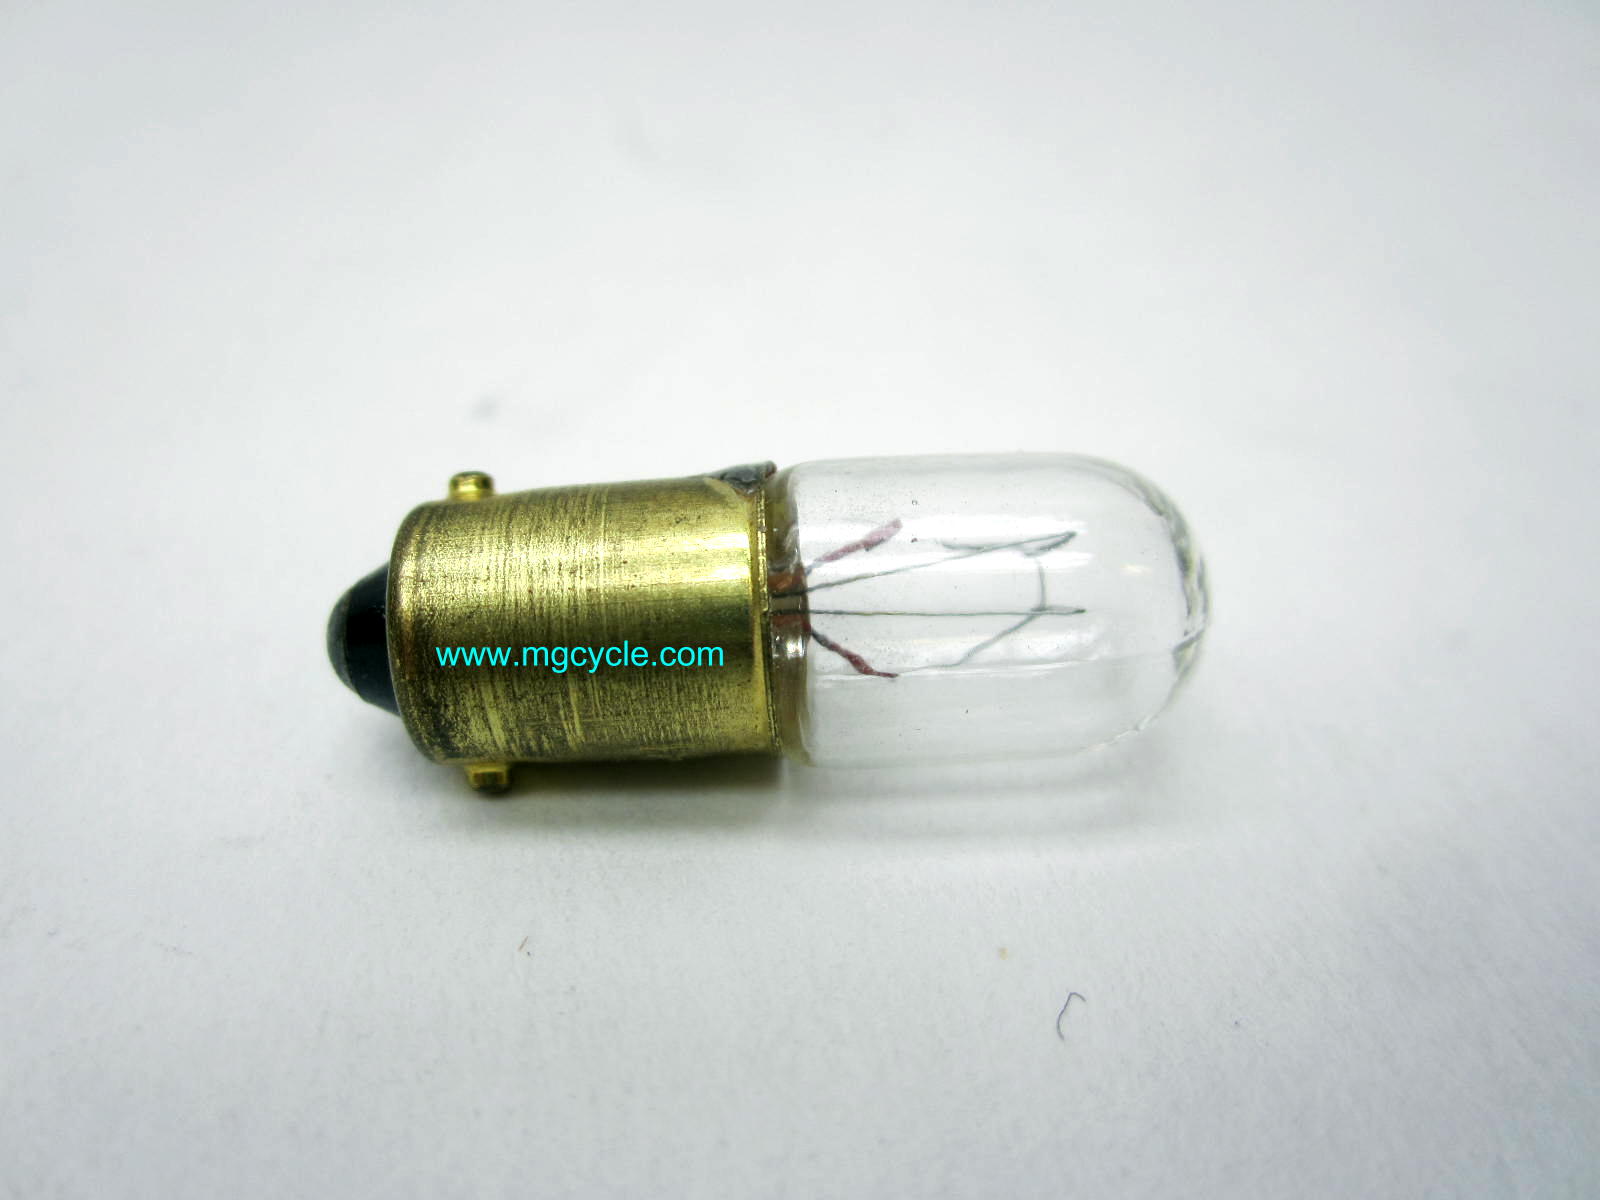 Pilot light bulb, daytime headlight, 12v/4w, speedo and tach